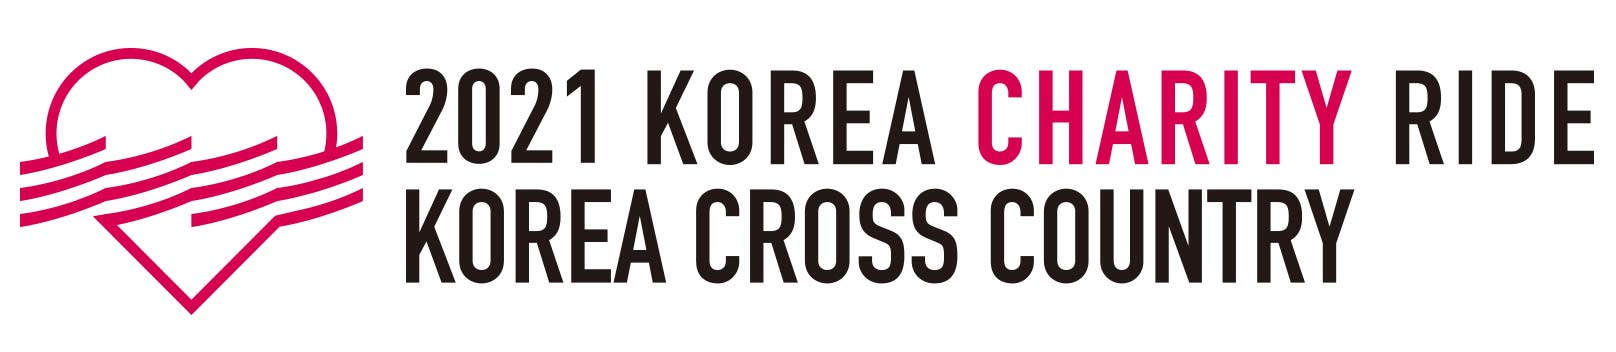 news_2021_korea_charity_ride_2